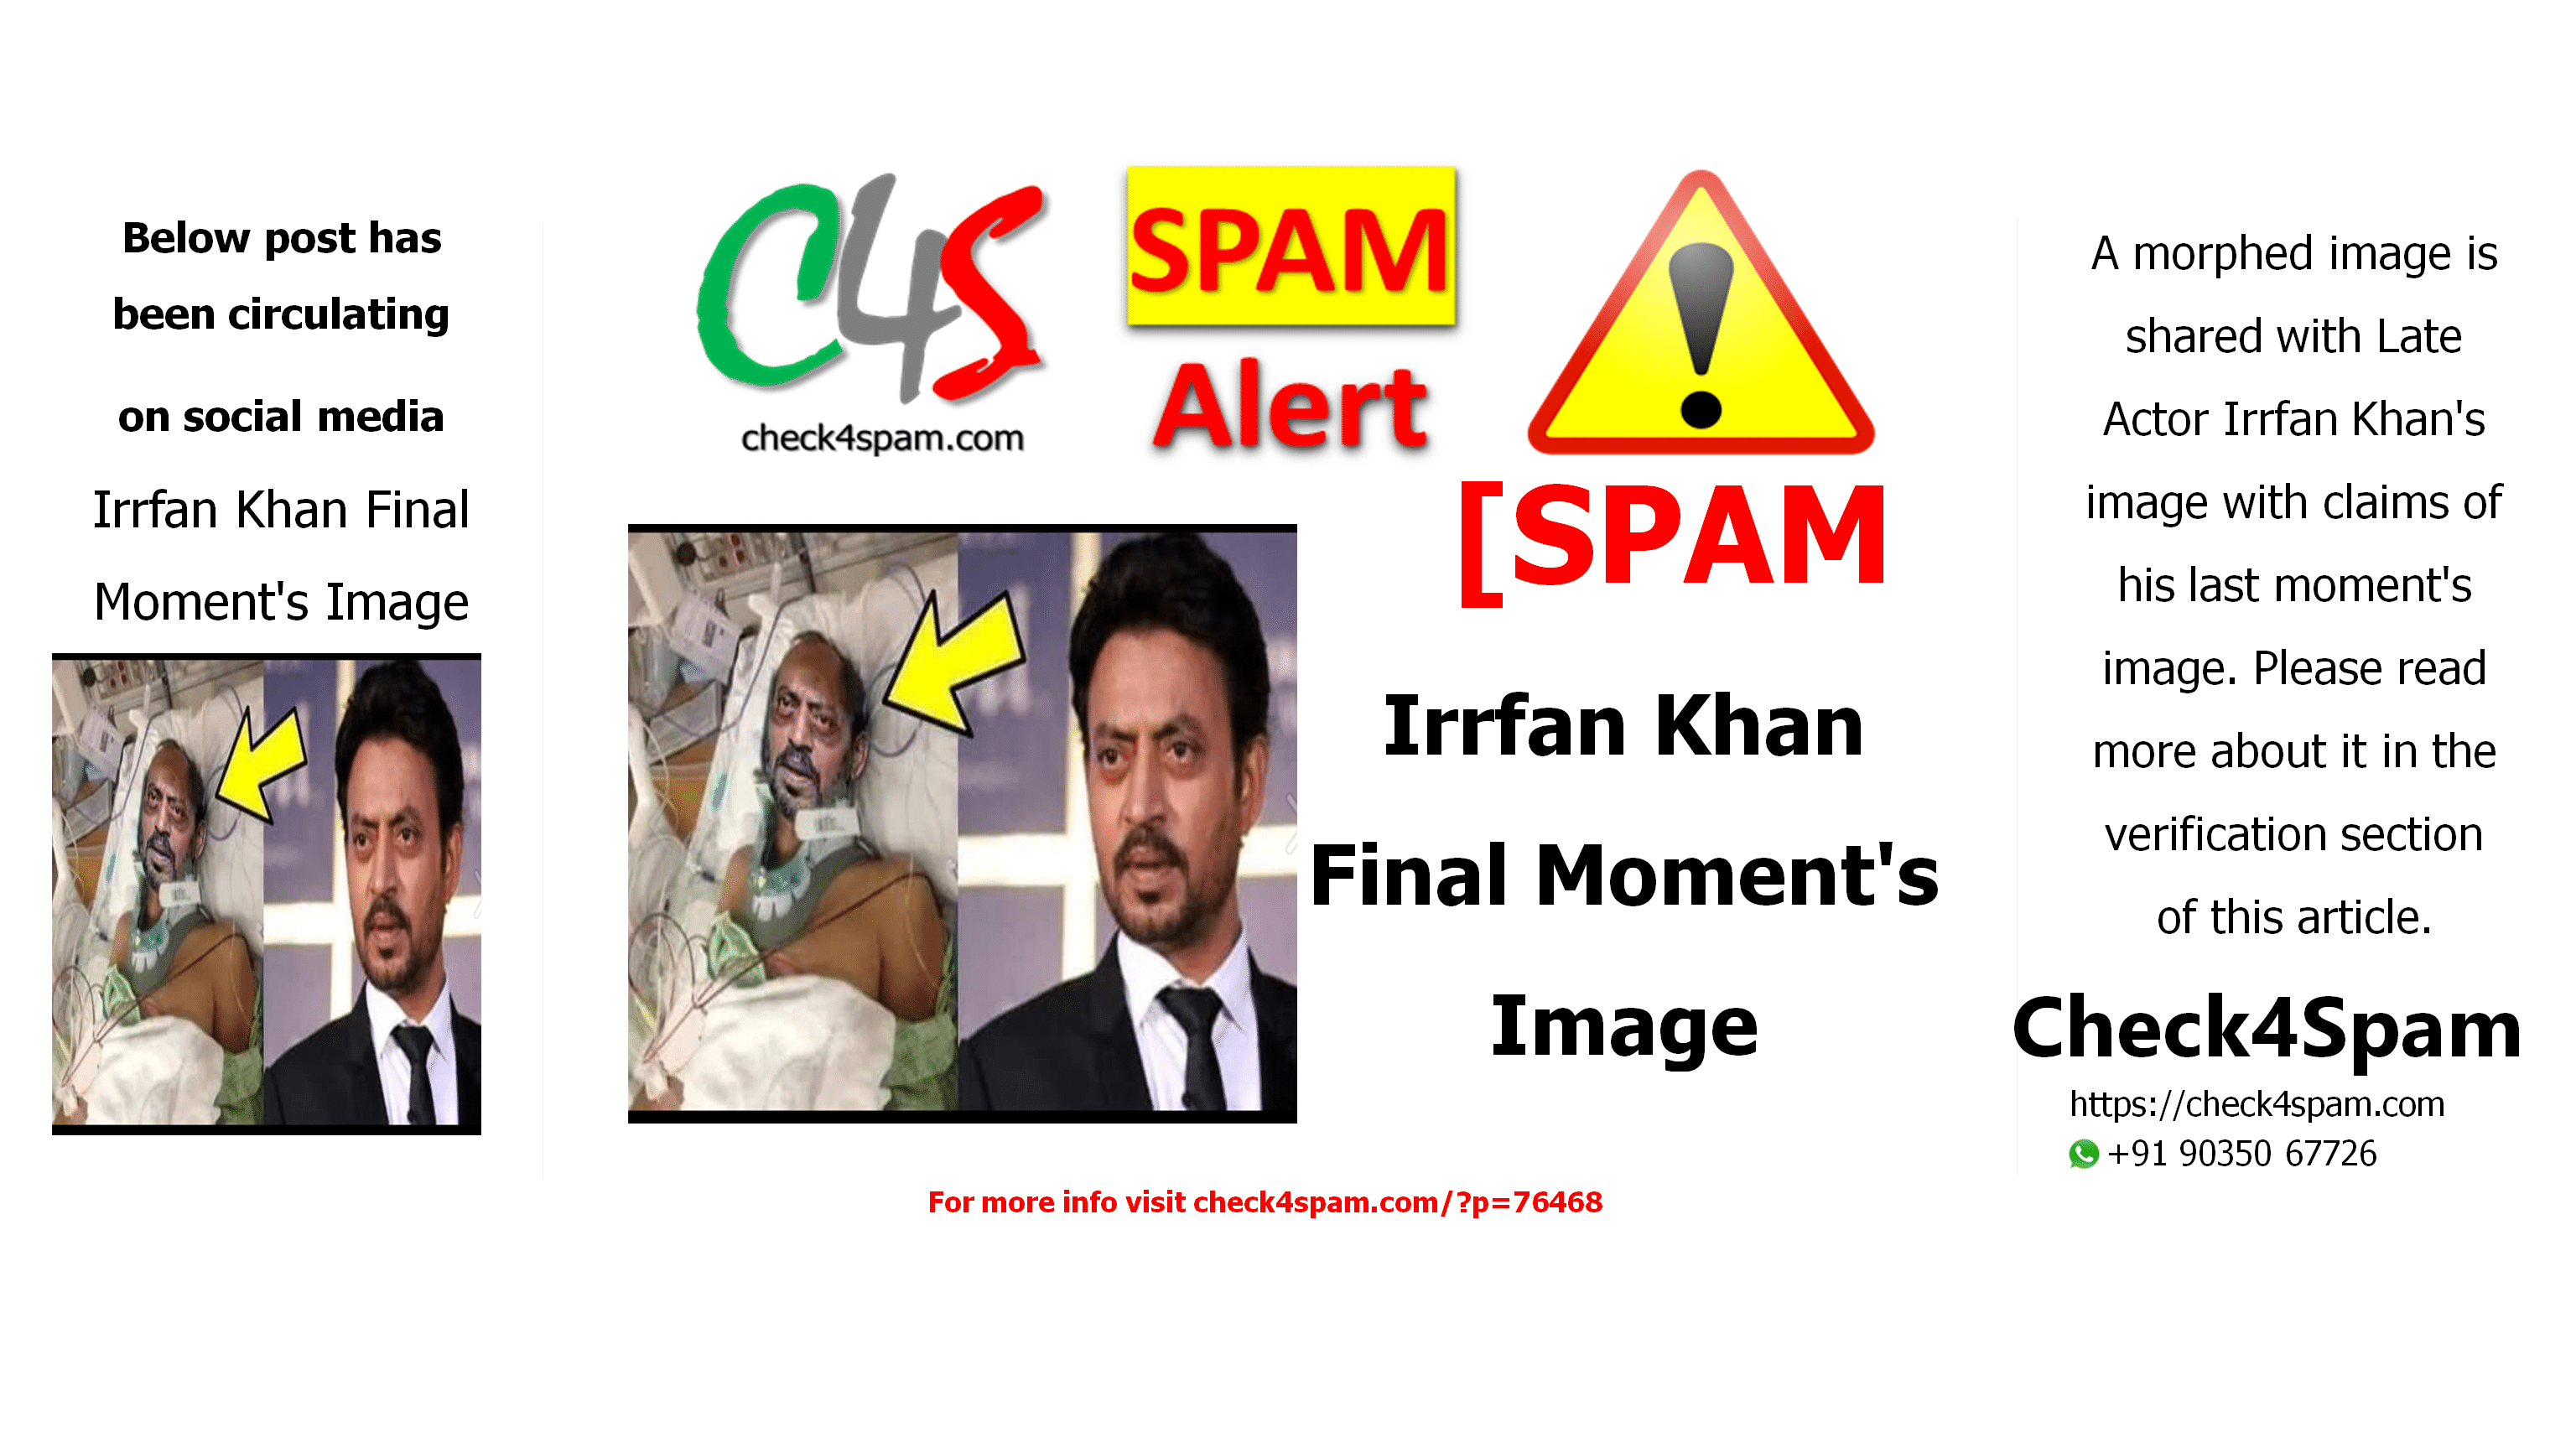 Irrfan Khan Final Moment's Image